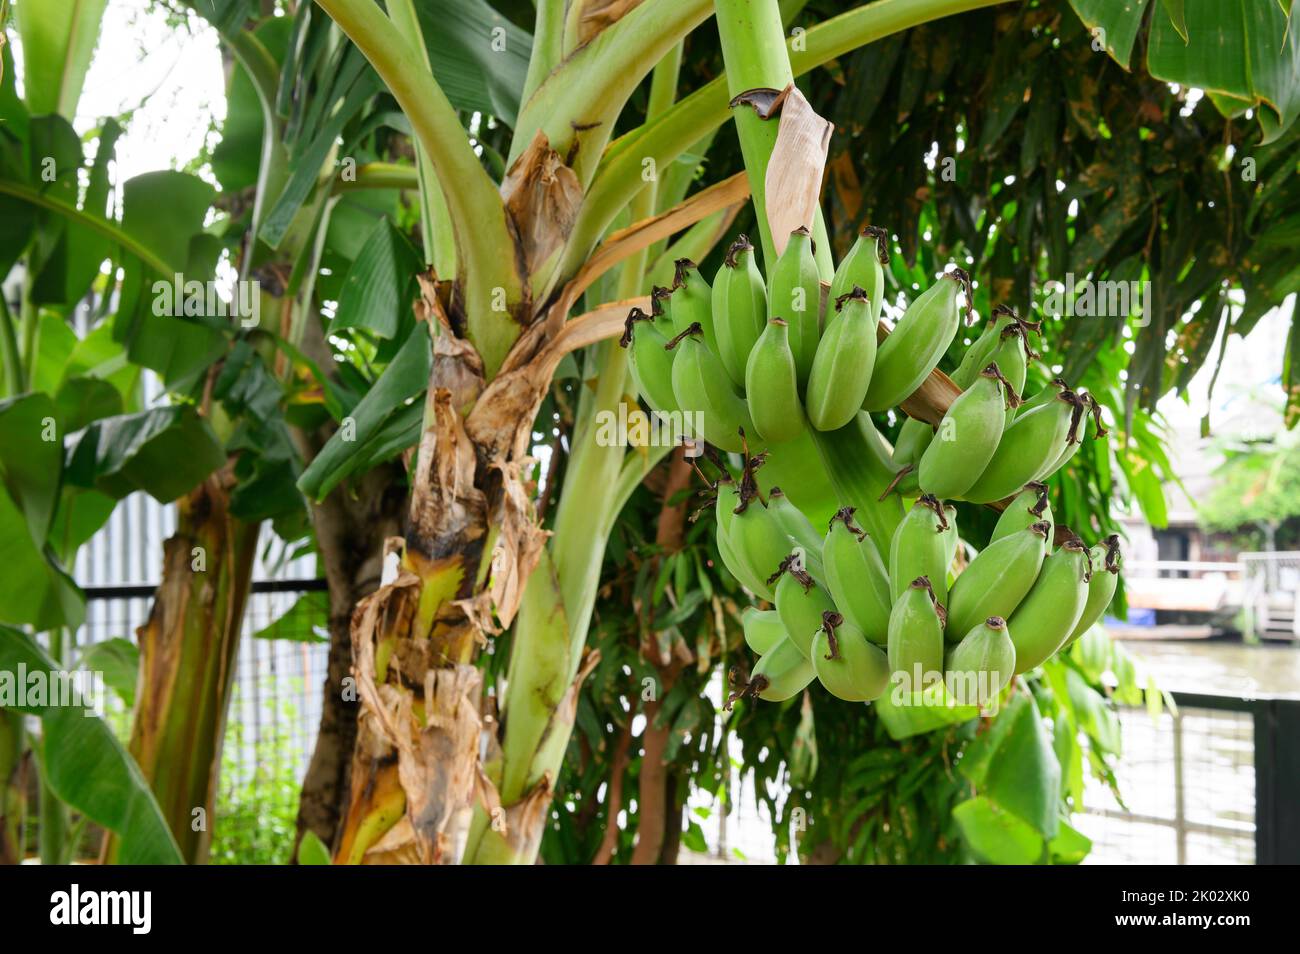 Banana tree with a bunch of bananas in the garden Stock Photo